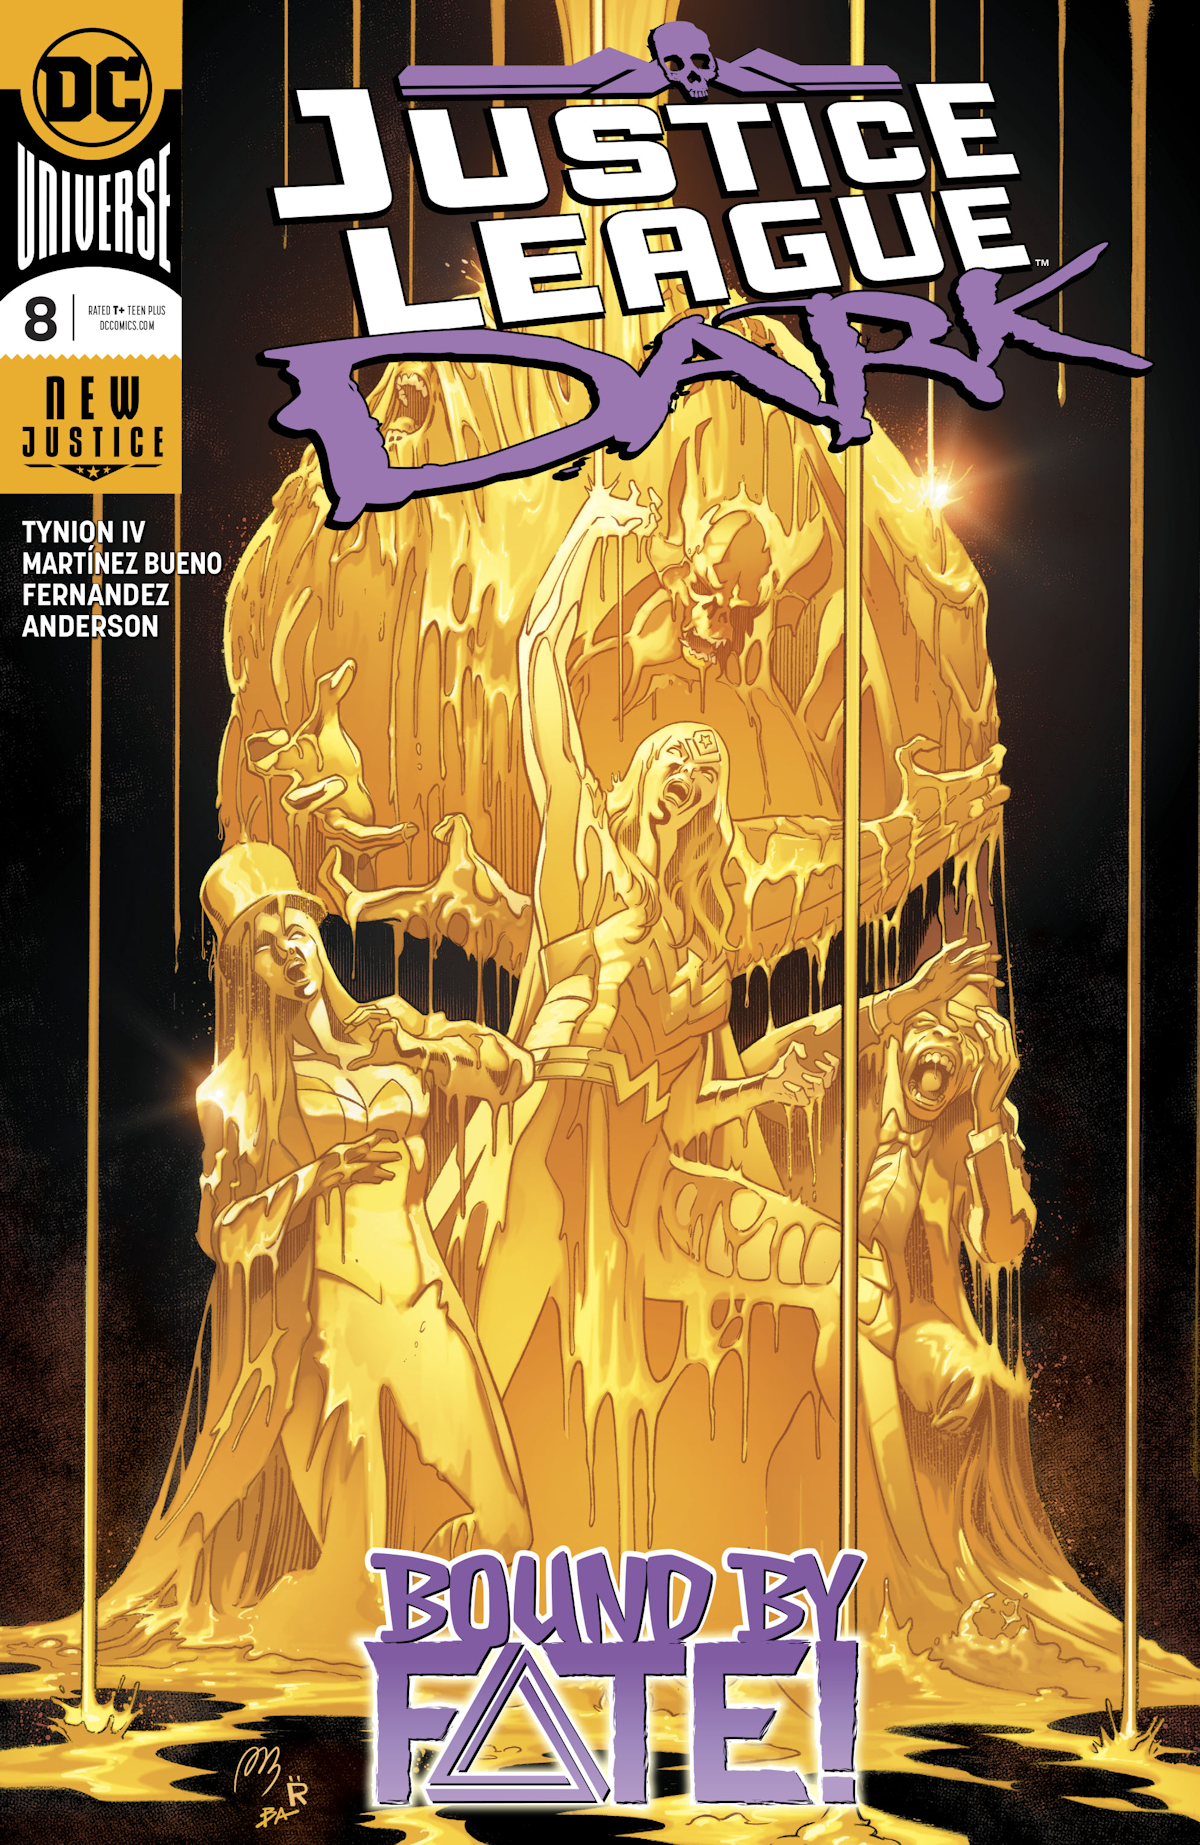 Justice League Dark Vol. 2 8 (Cover A)